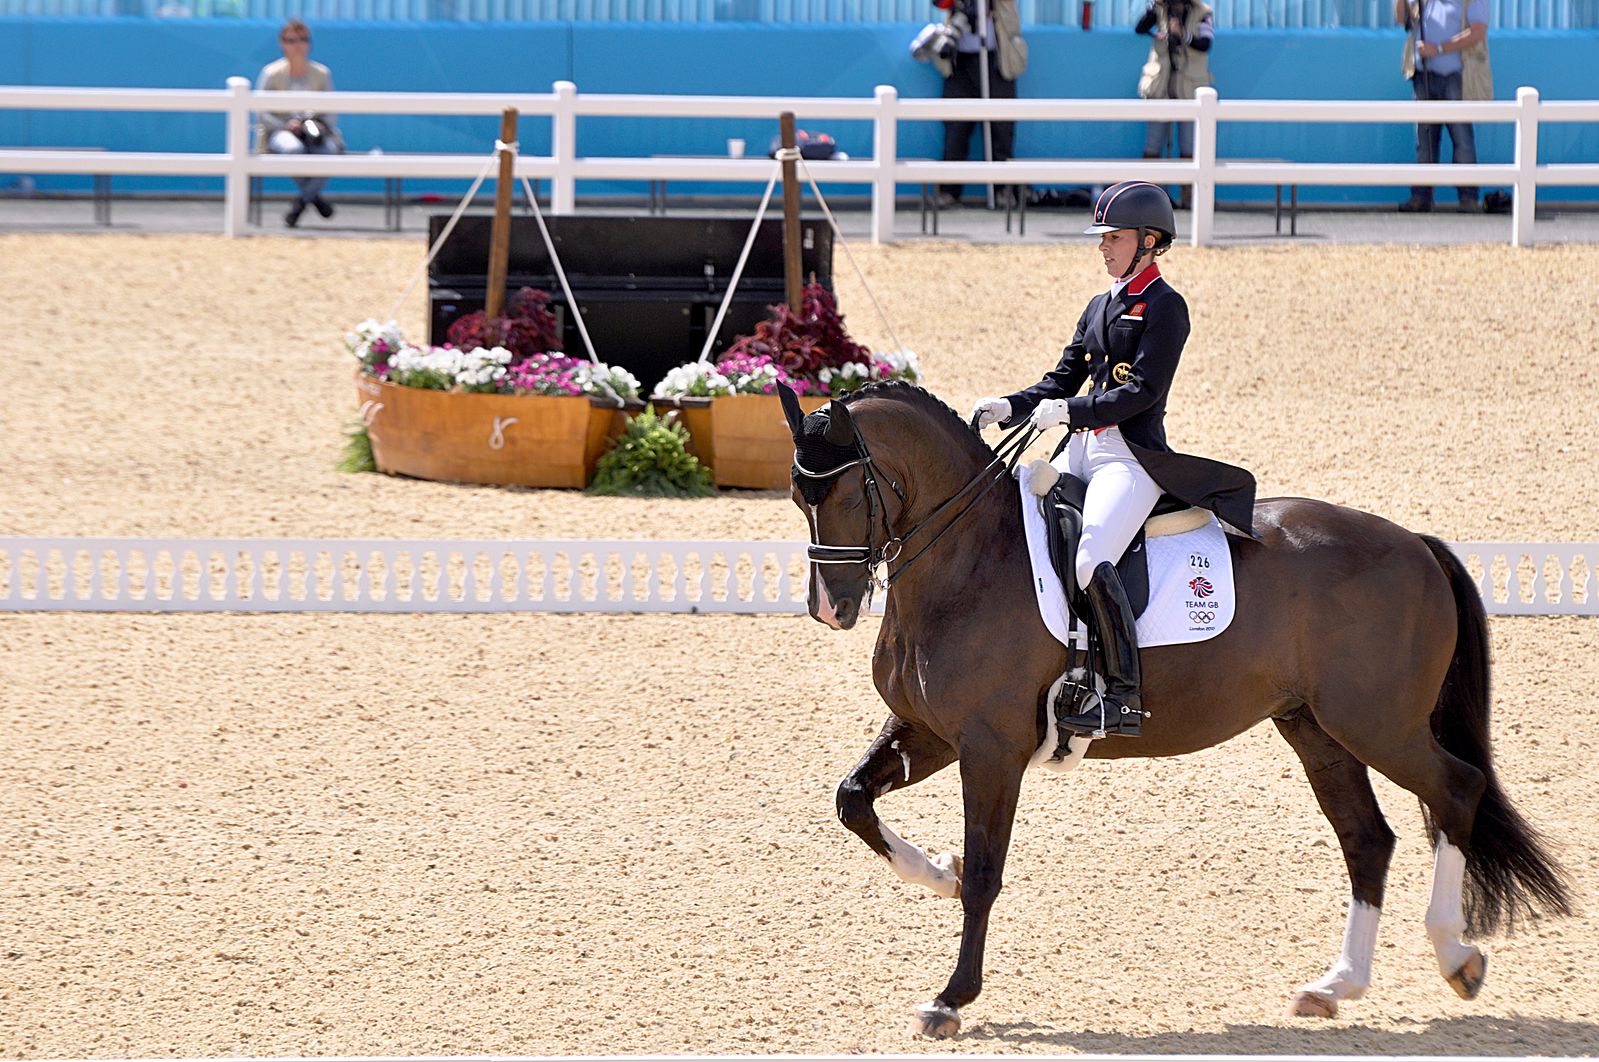 Equestrian Dressage: Charlotte Dujardin and Valegro at London 2012